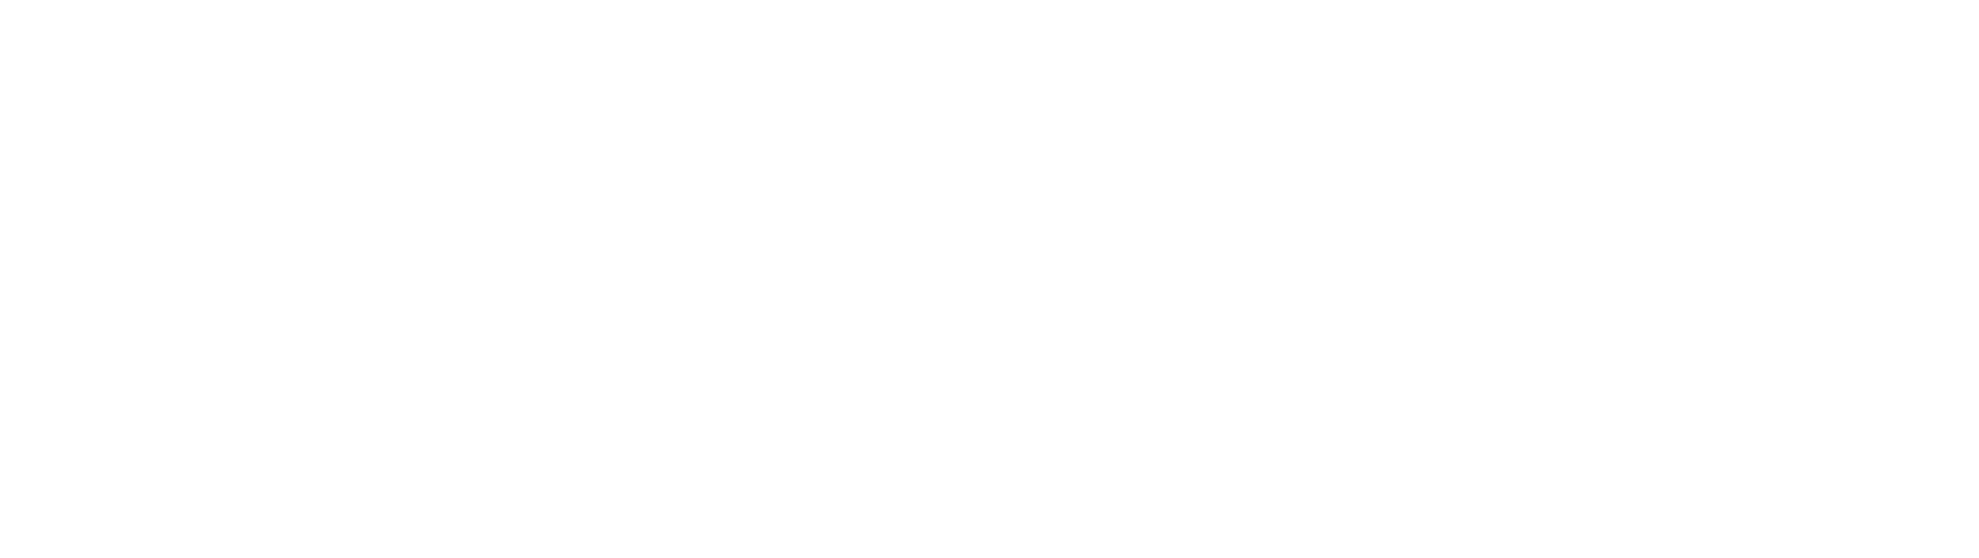 A.Bornemann design.fotografie - Logo